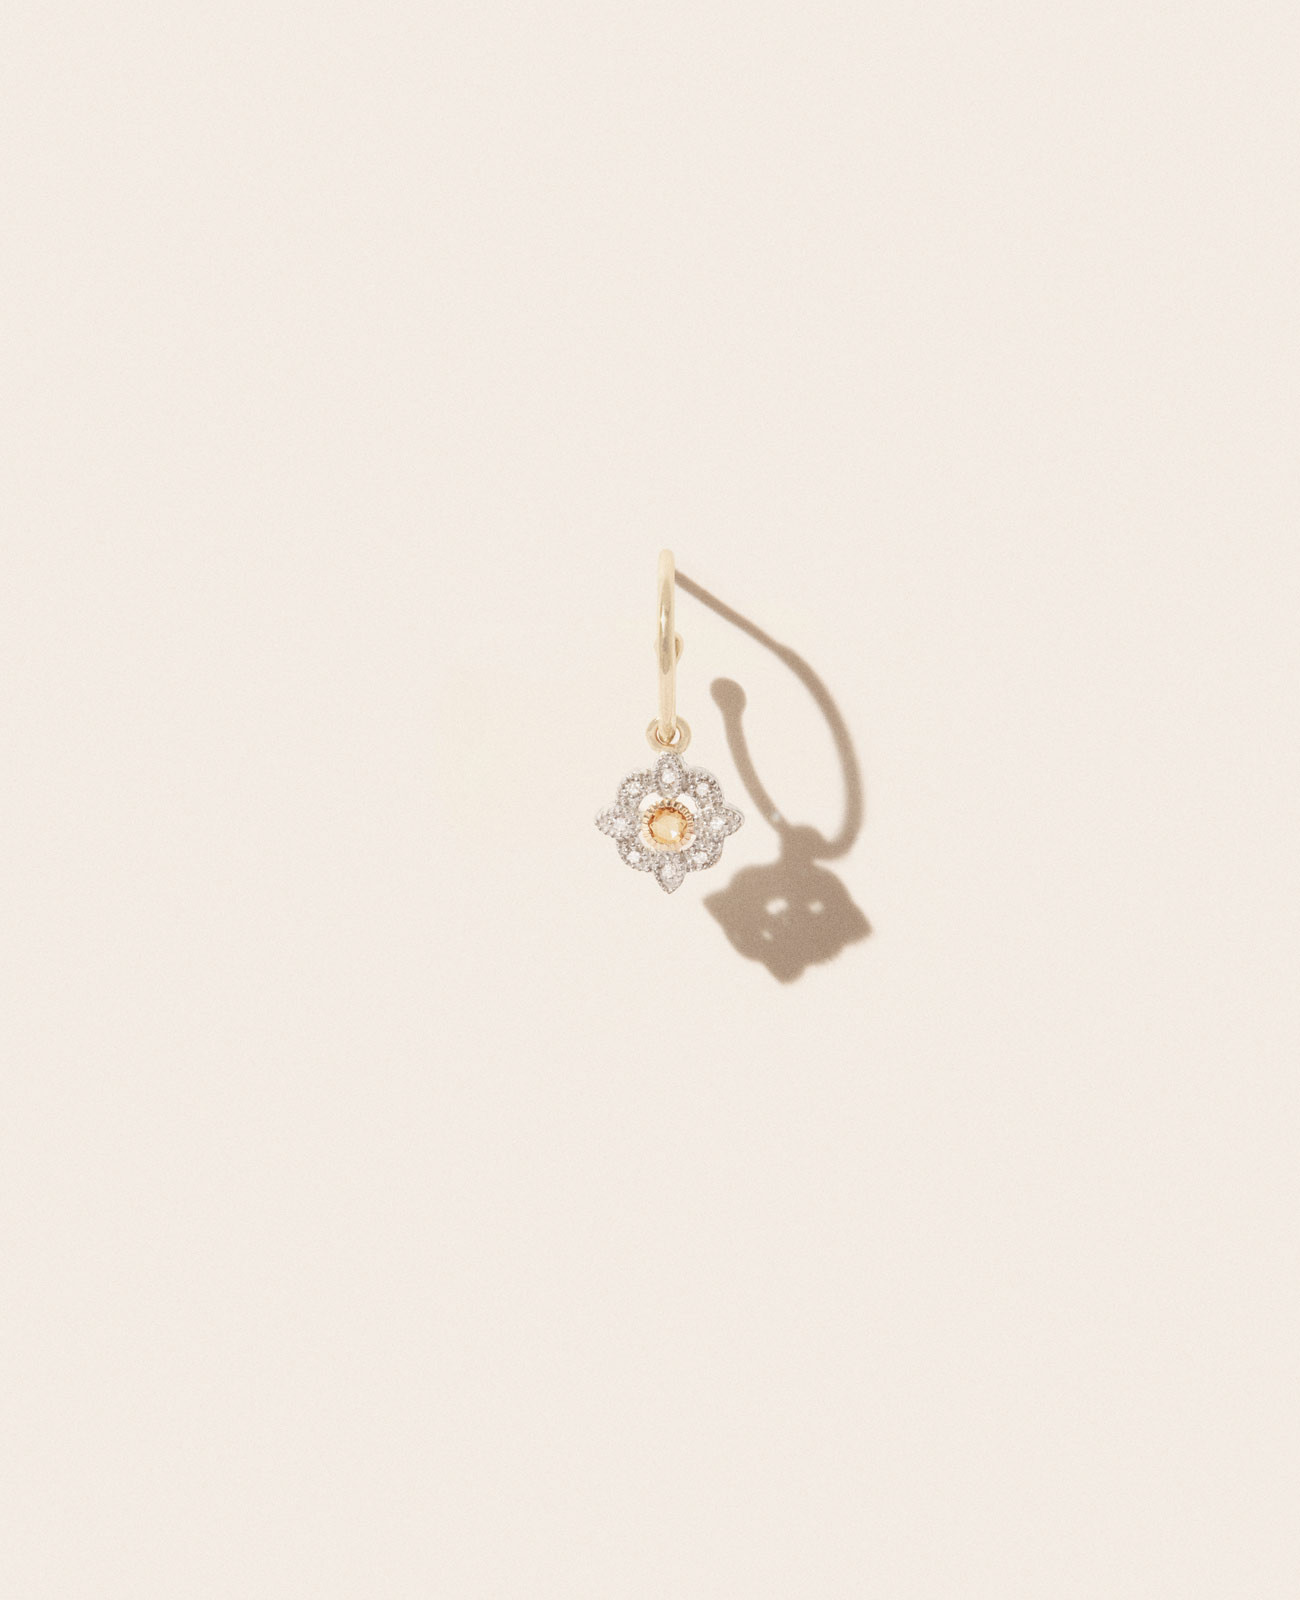 BETTINA DIAMOND earring pascale monvoisin jewelry paris